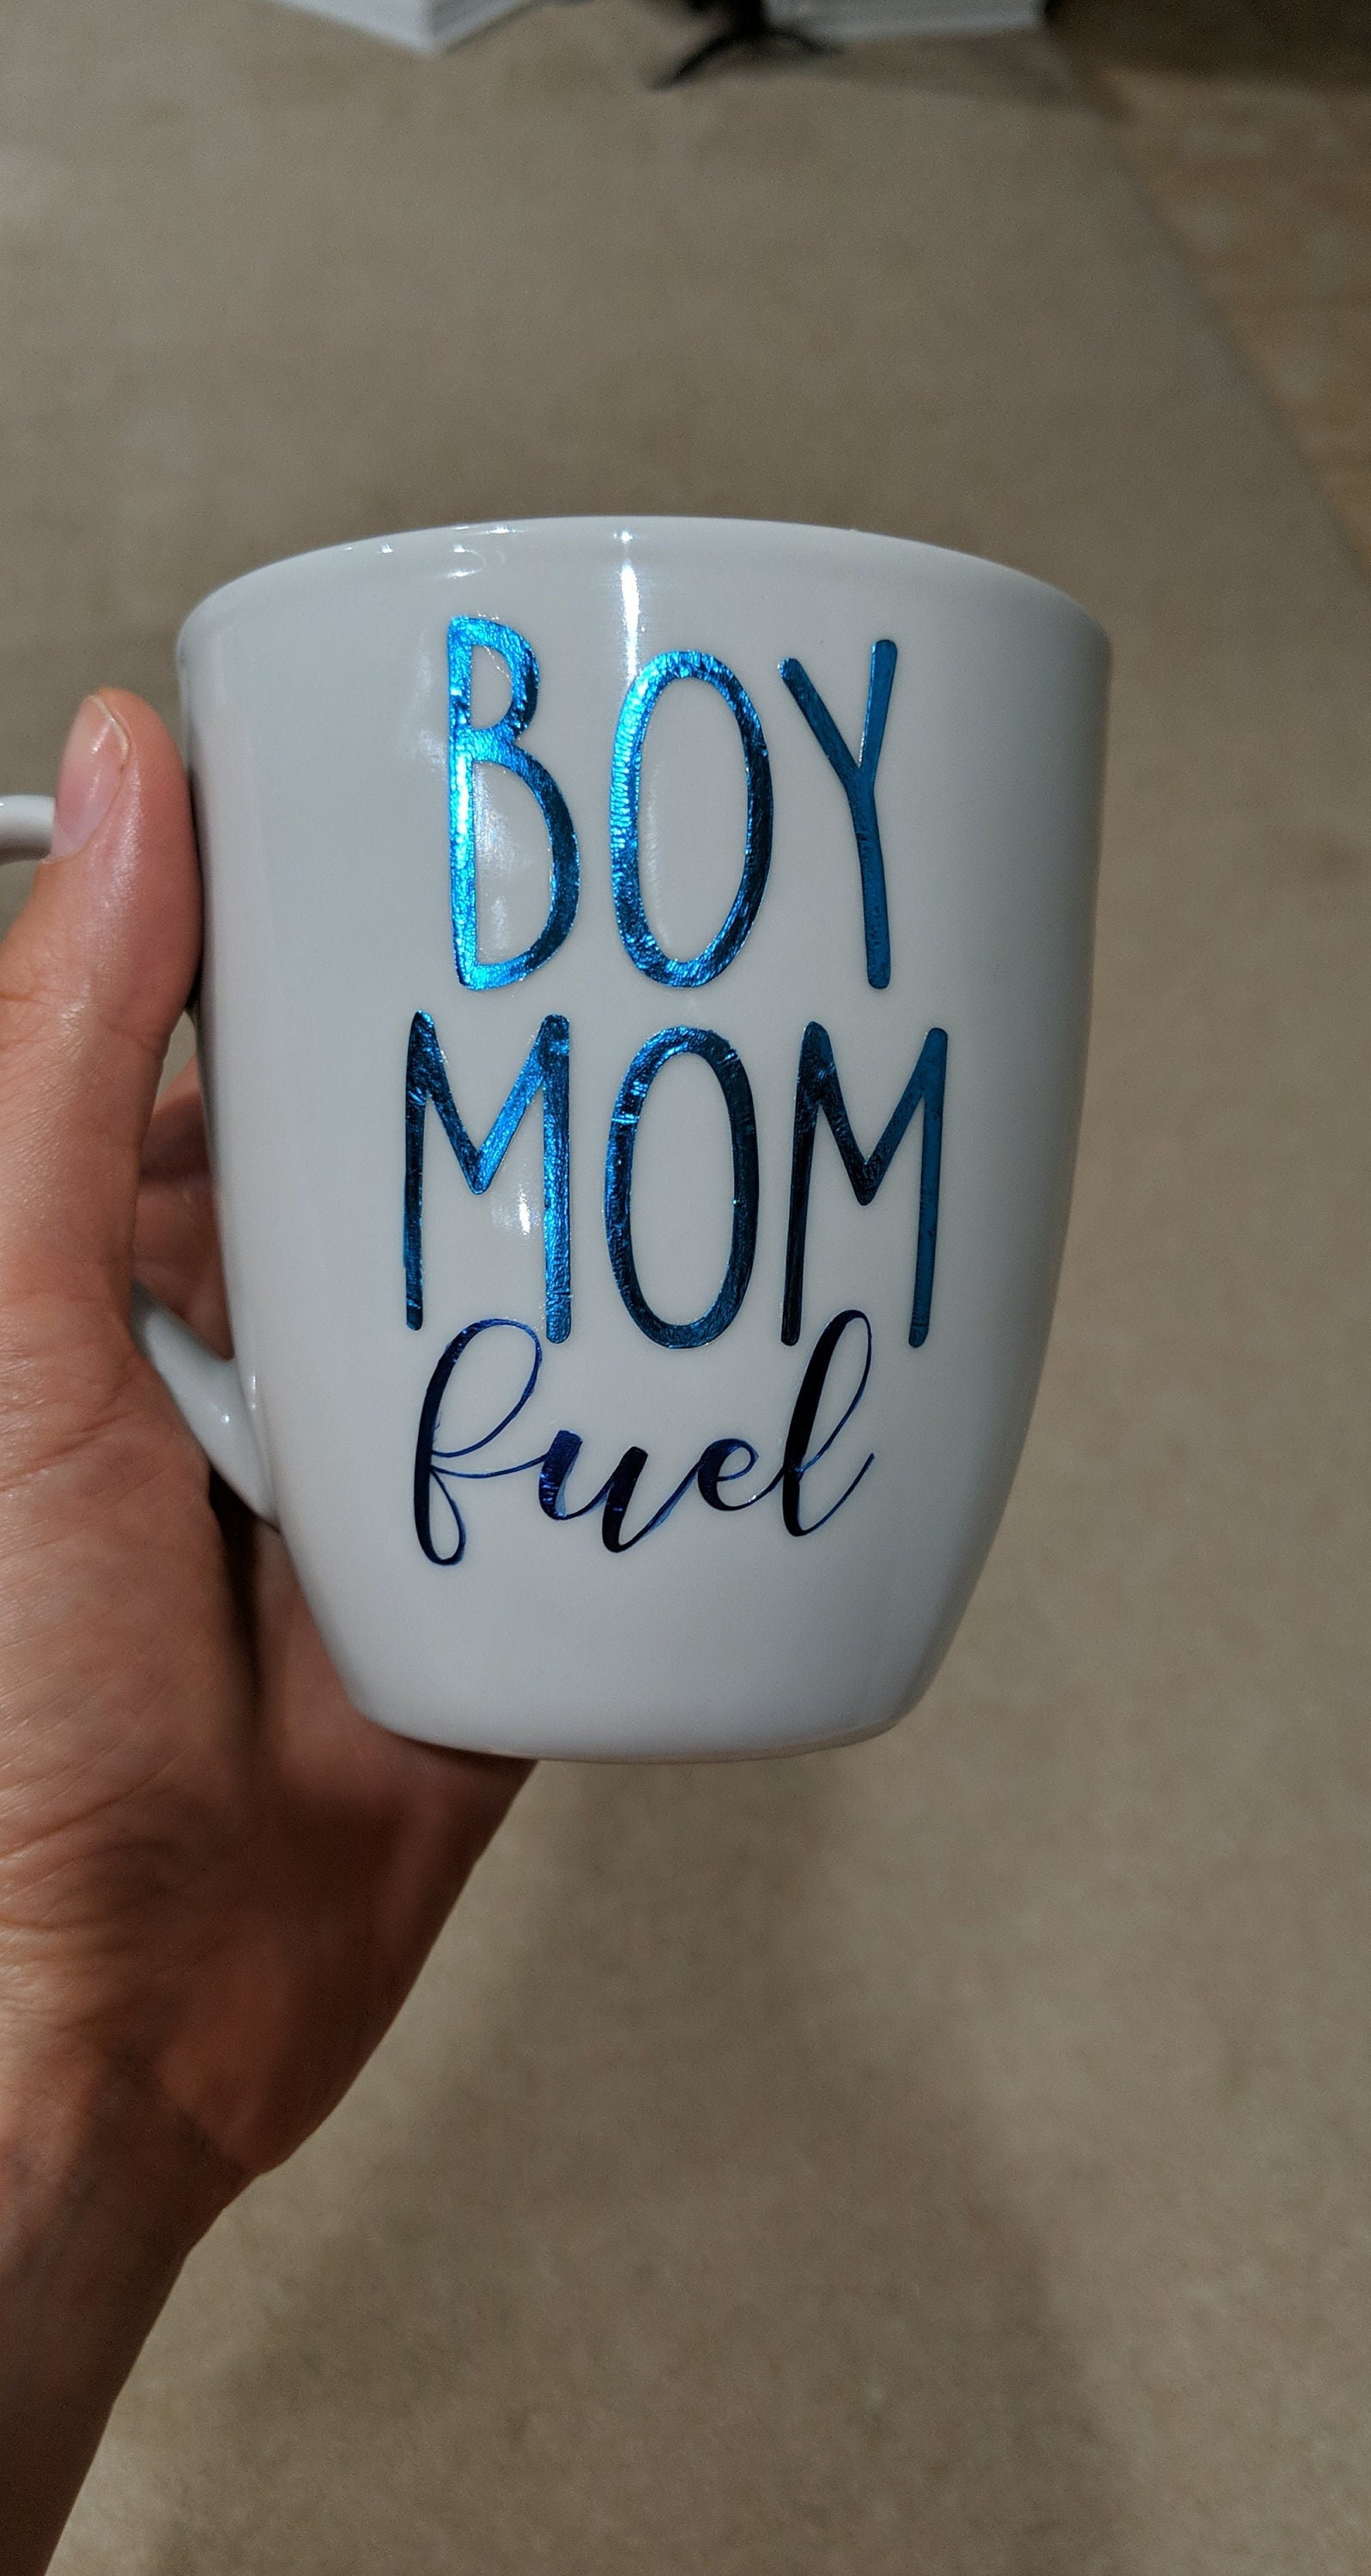 Fuel Up with this Boy Mom Mug